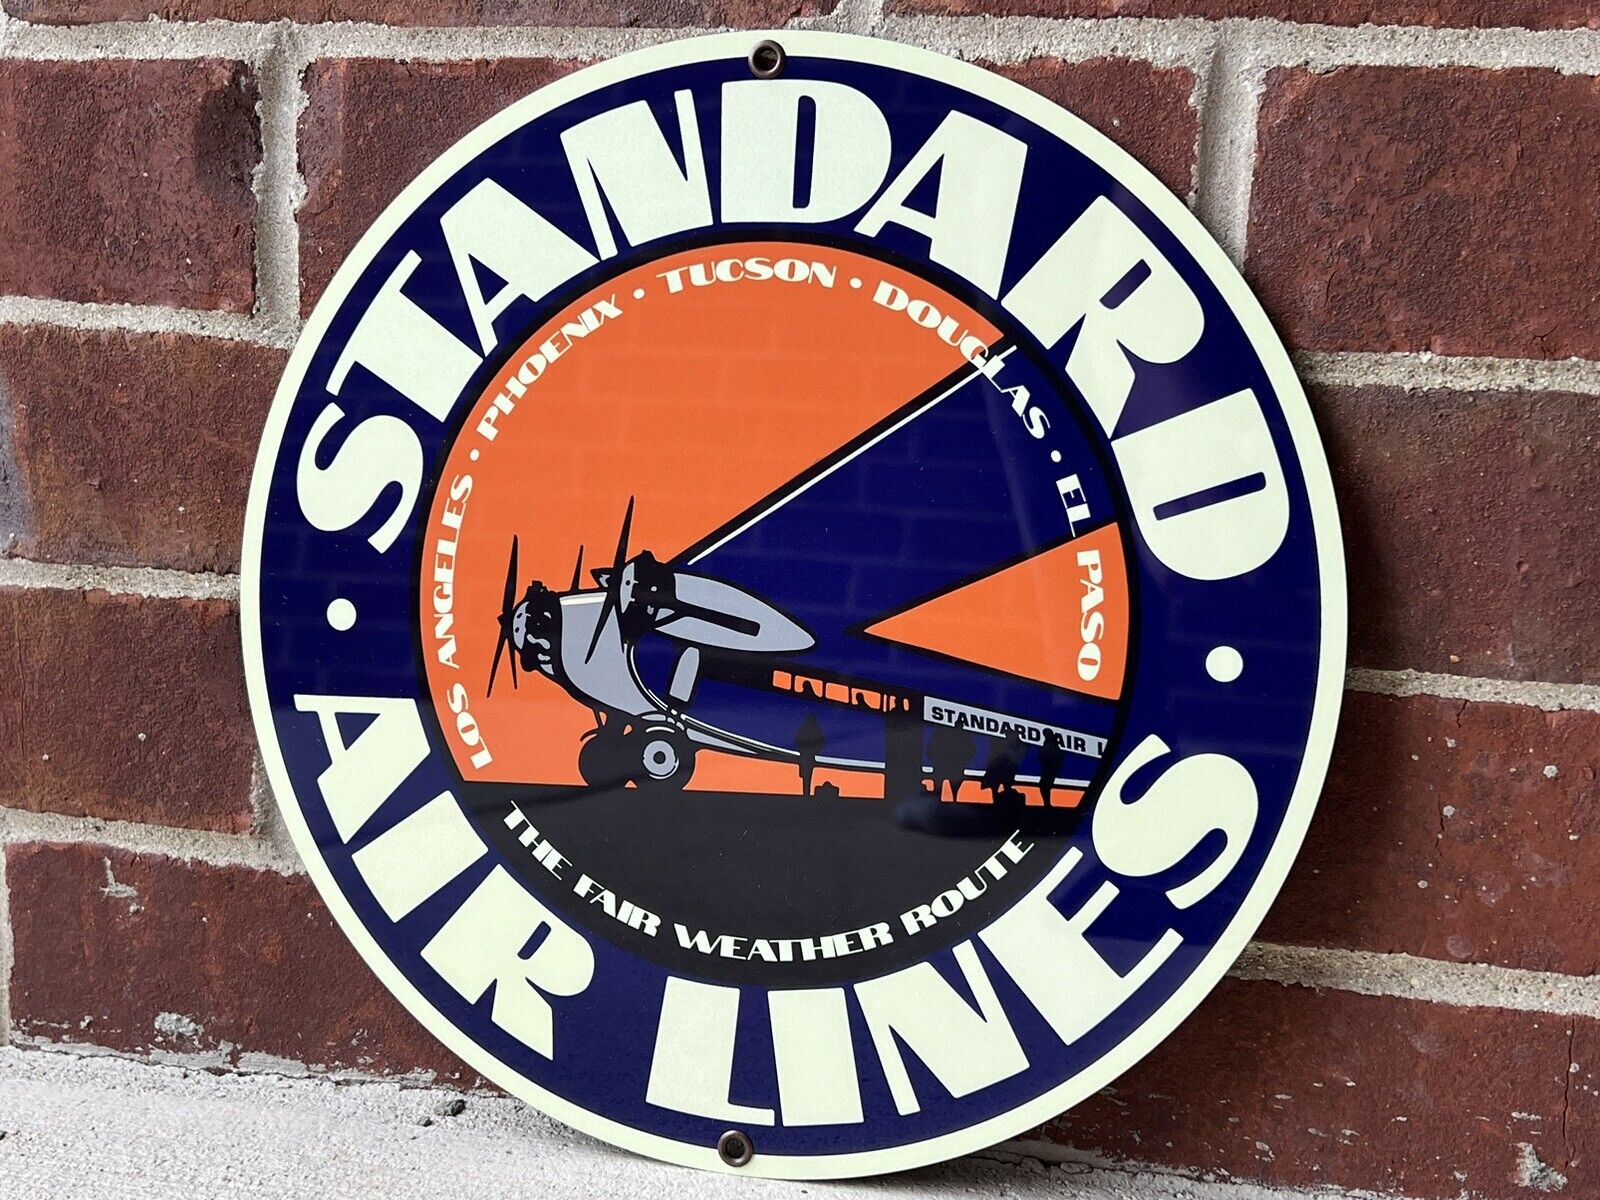 Standard Aviation Aircraft Gasoline garage Oil Gas man cave round sign